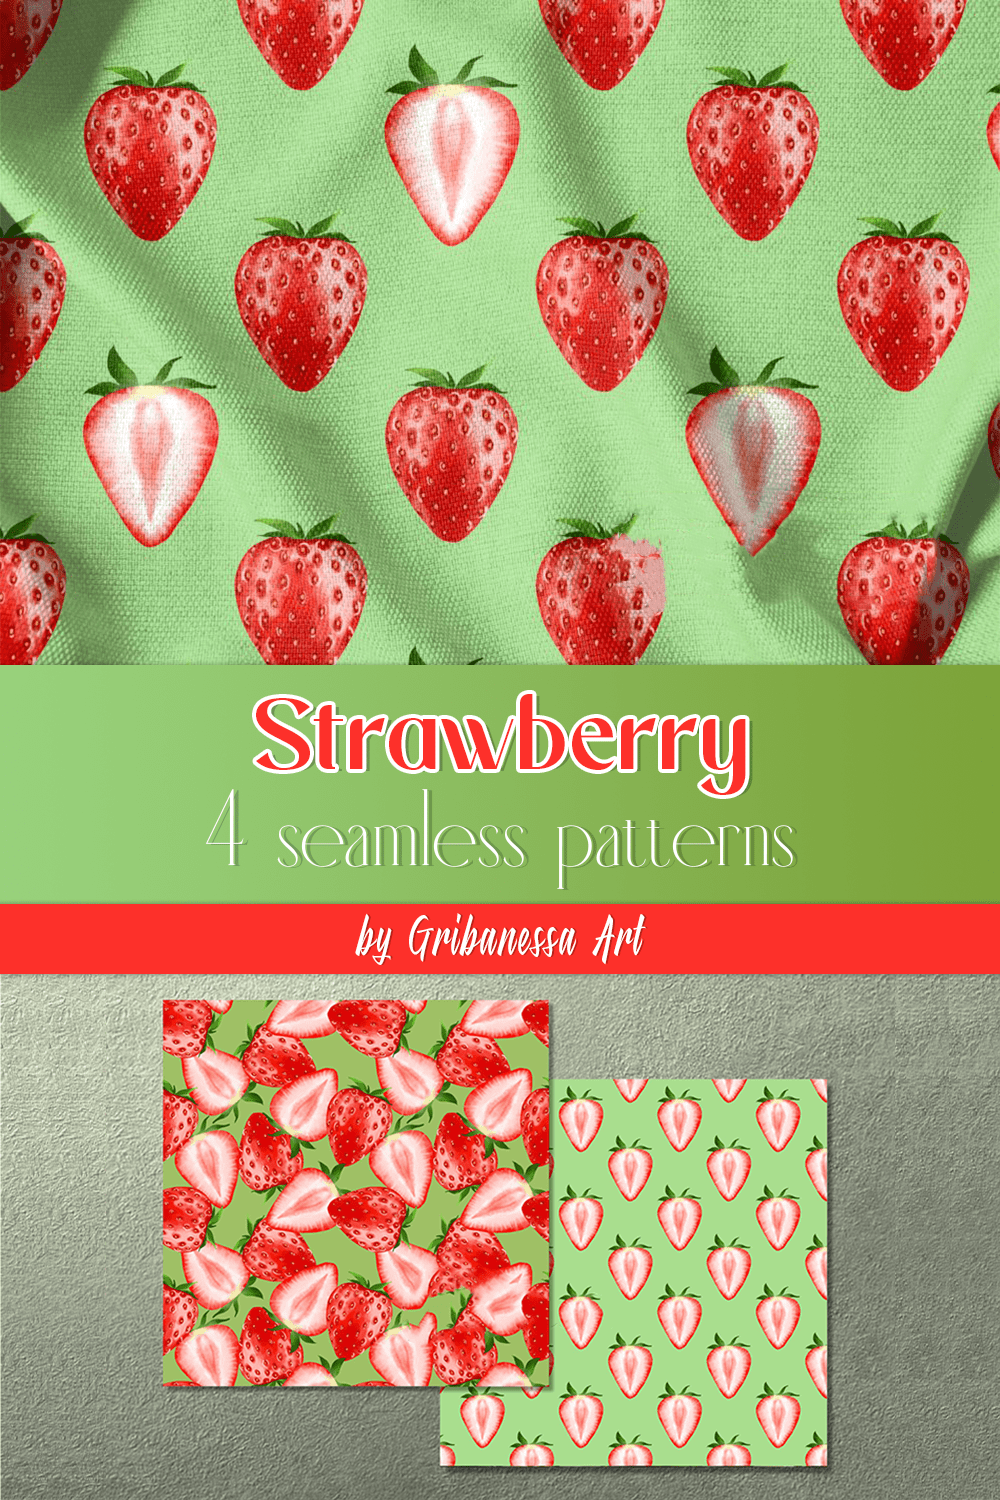 Strawberry. 4 Seamless Patterns - Pinterest.